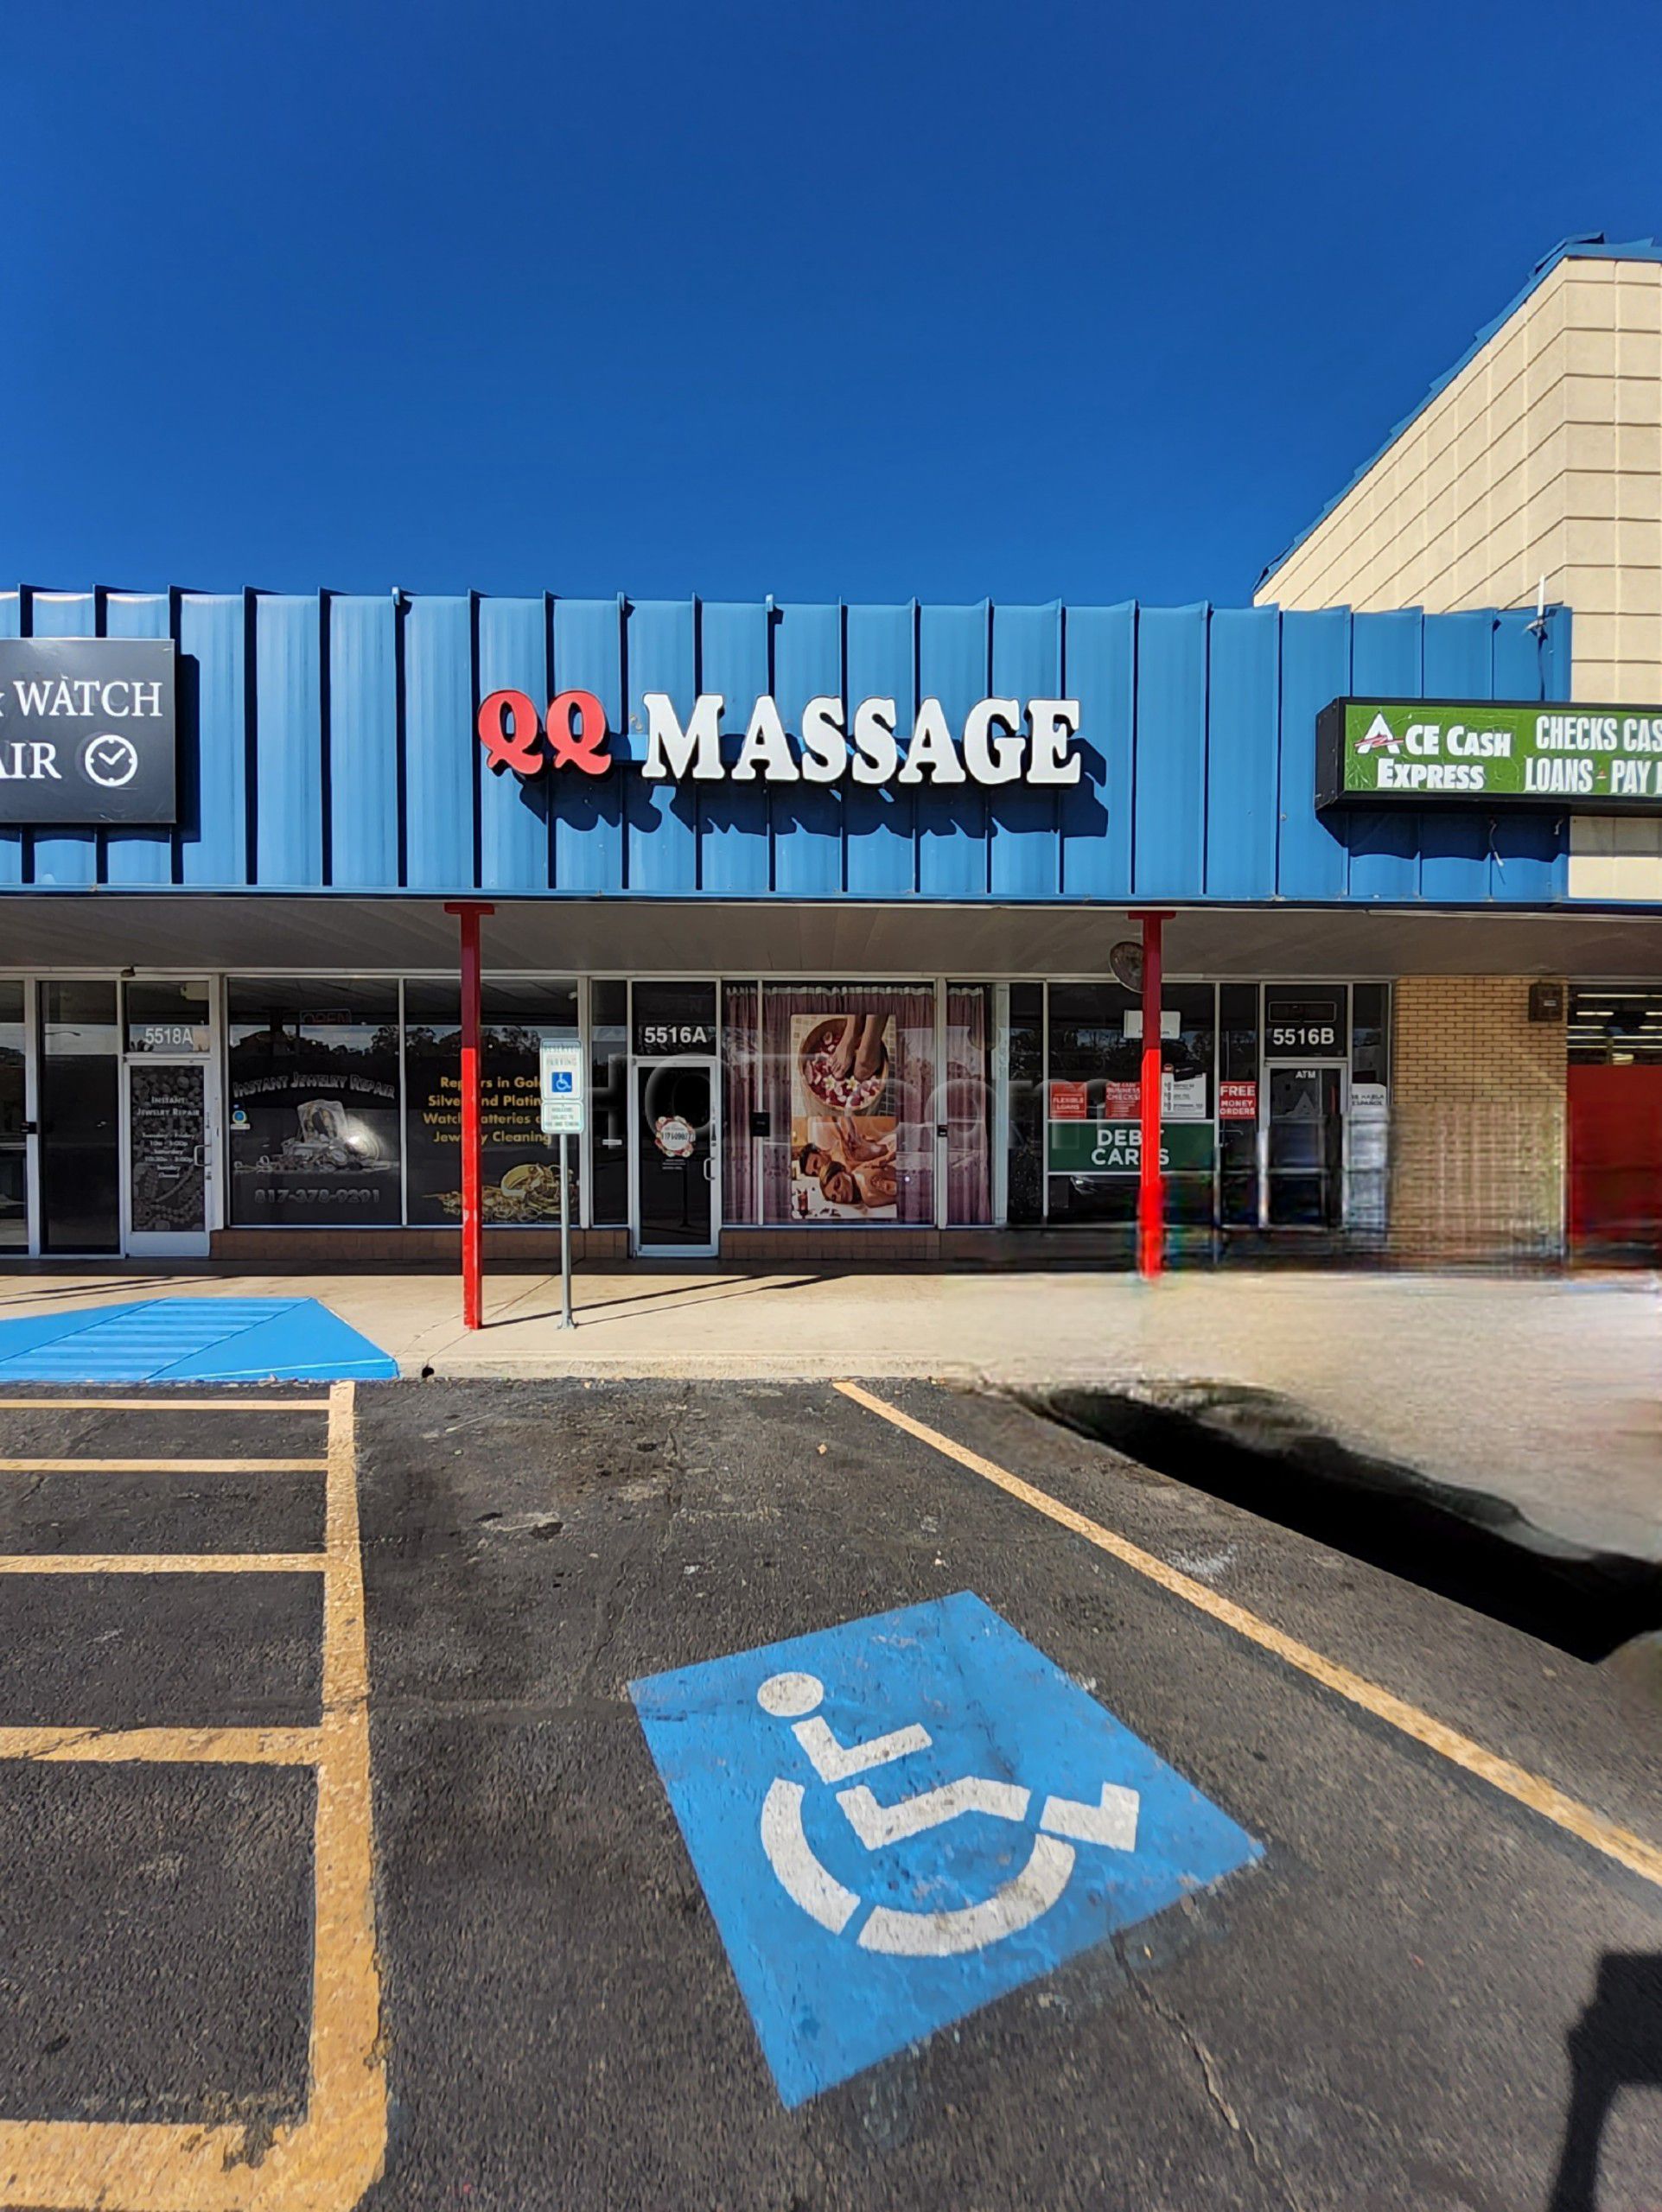 Fort Worth, Texas QQ Massage